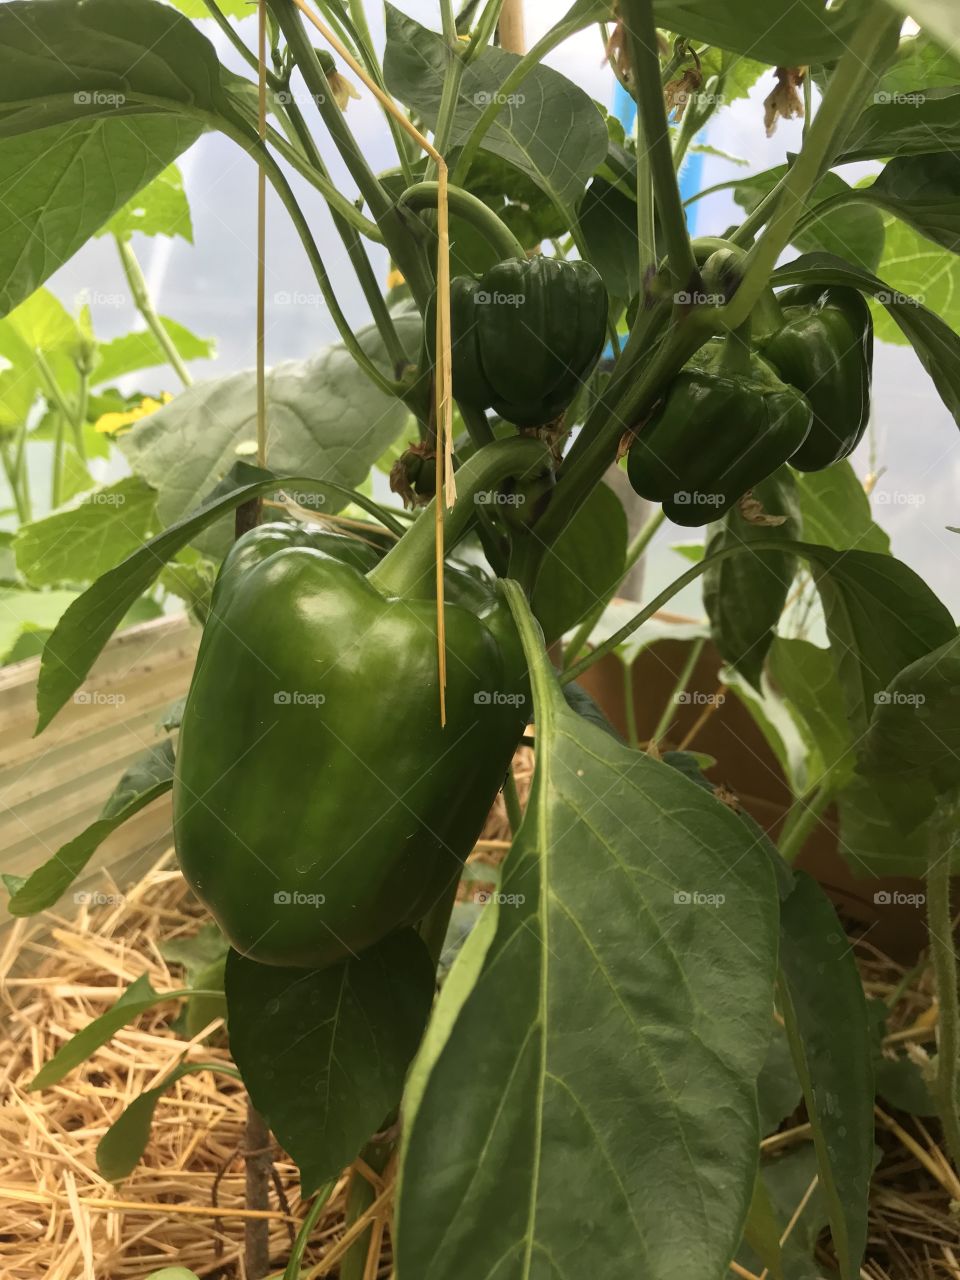 Green Bell Pepper Plant